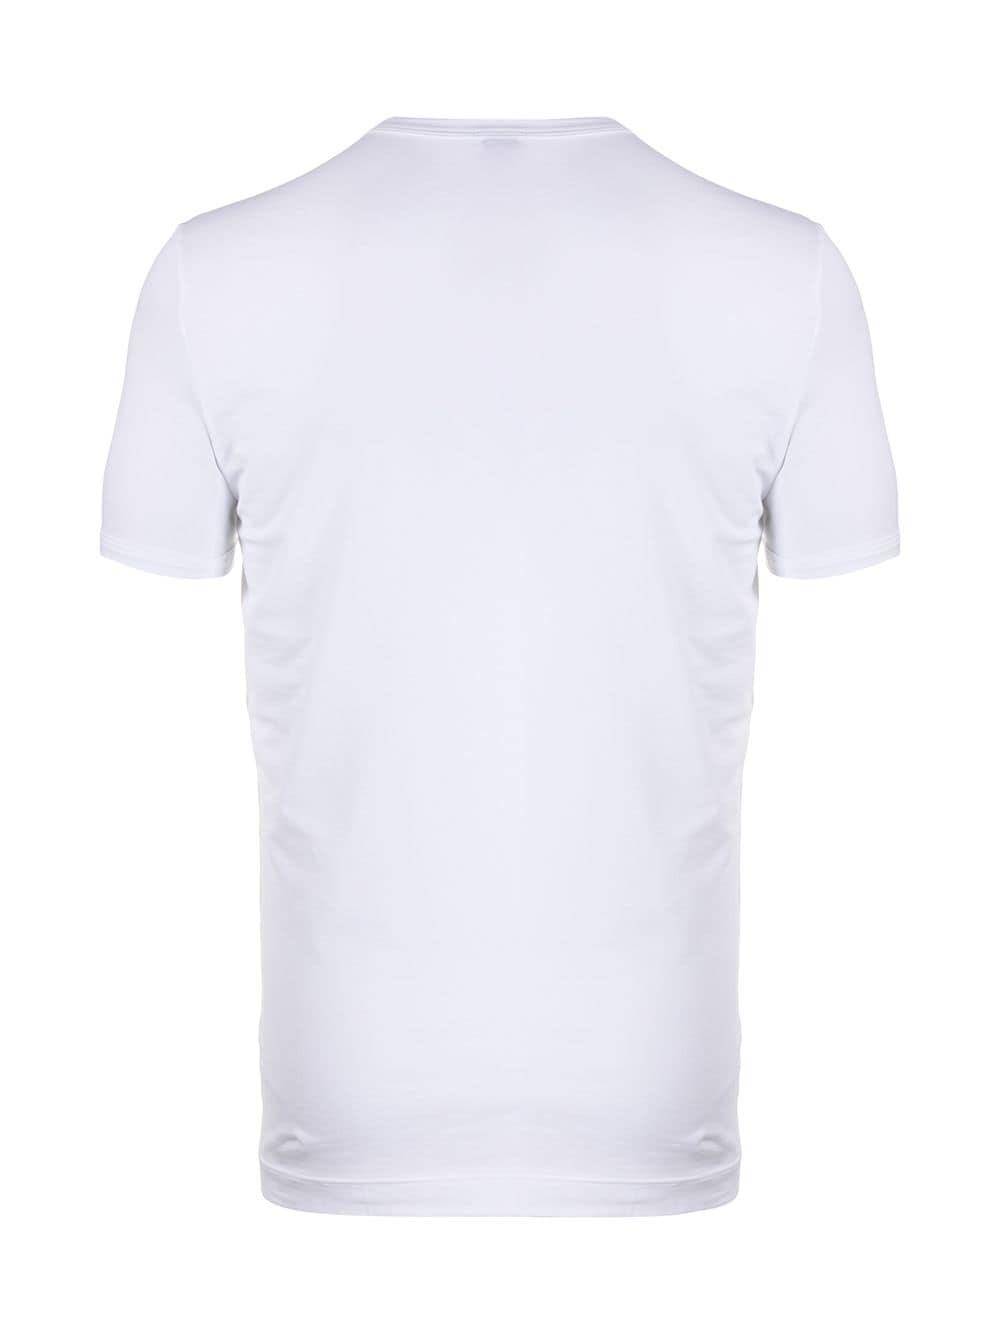 Dolce & Gabbana T-shirt Intimo in White for Men - Lyst